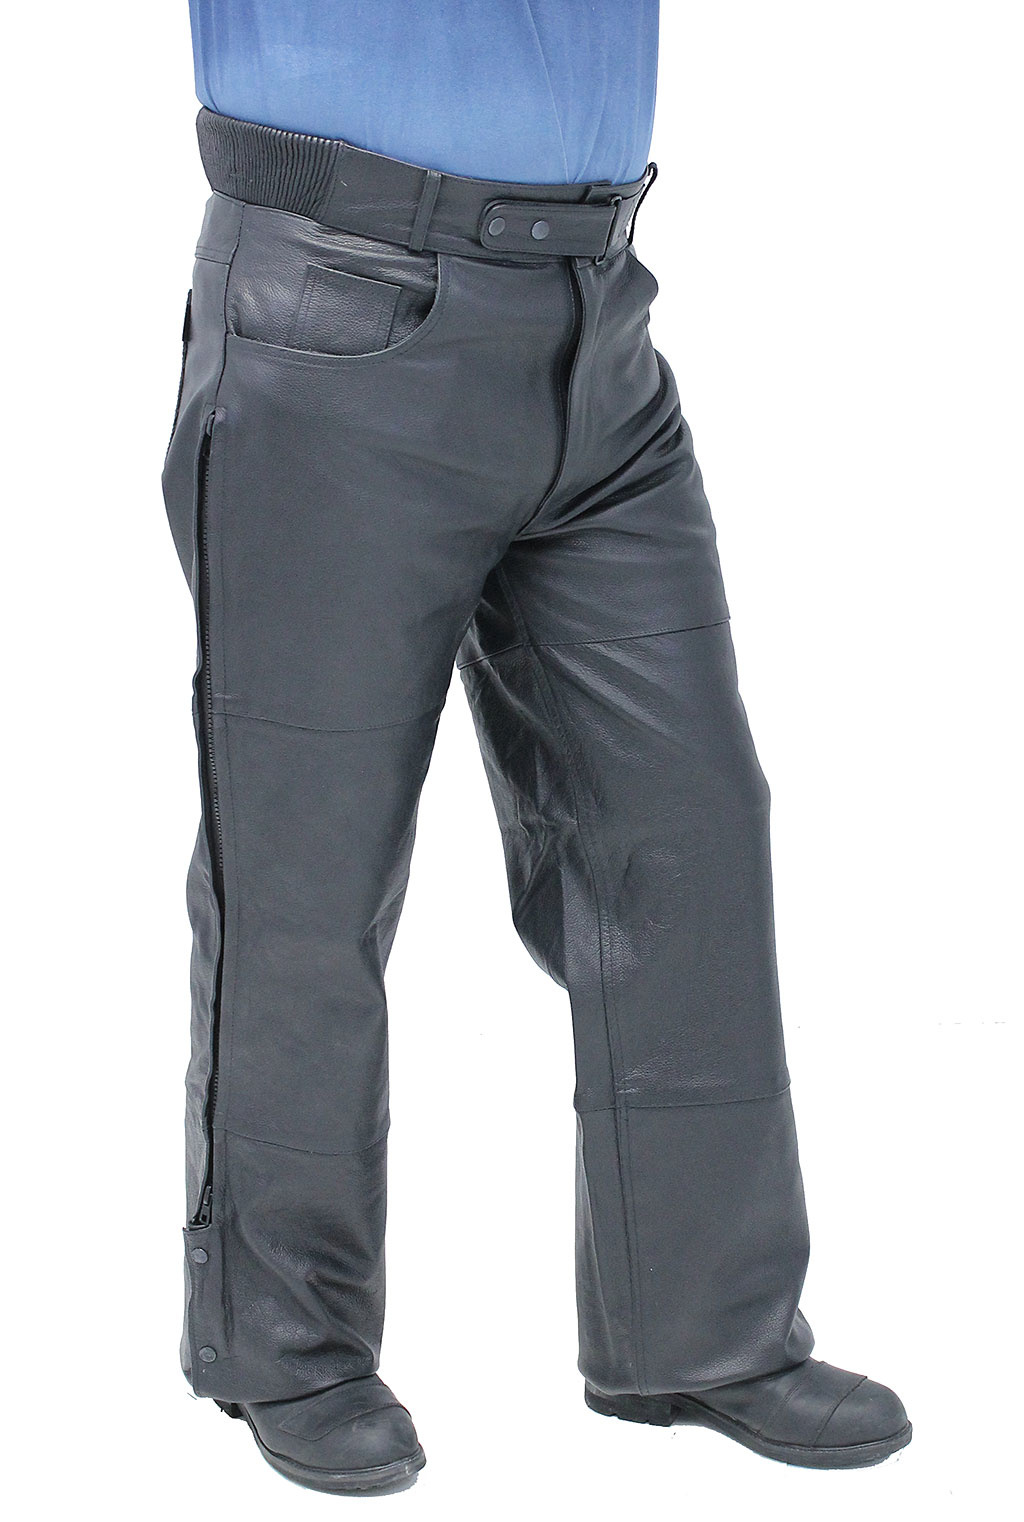 Unisex Premium Leather Motorcycle Overpants #MP506 - Jamin Leather™